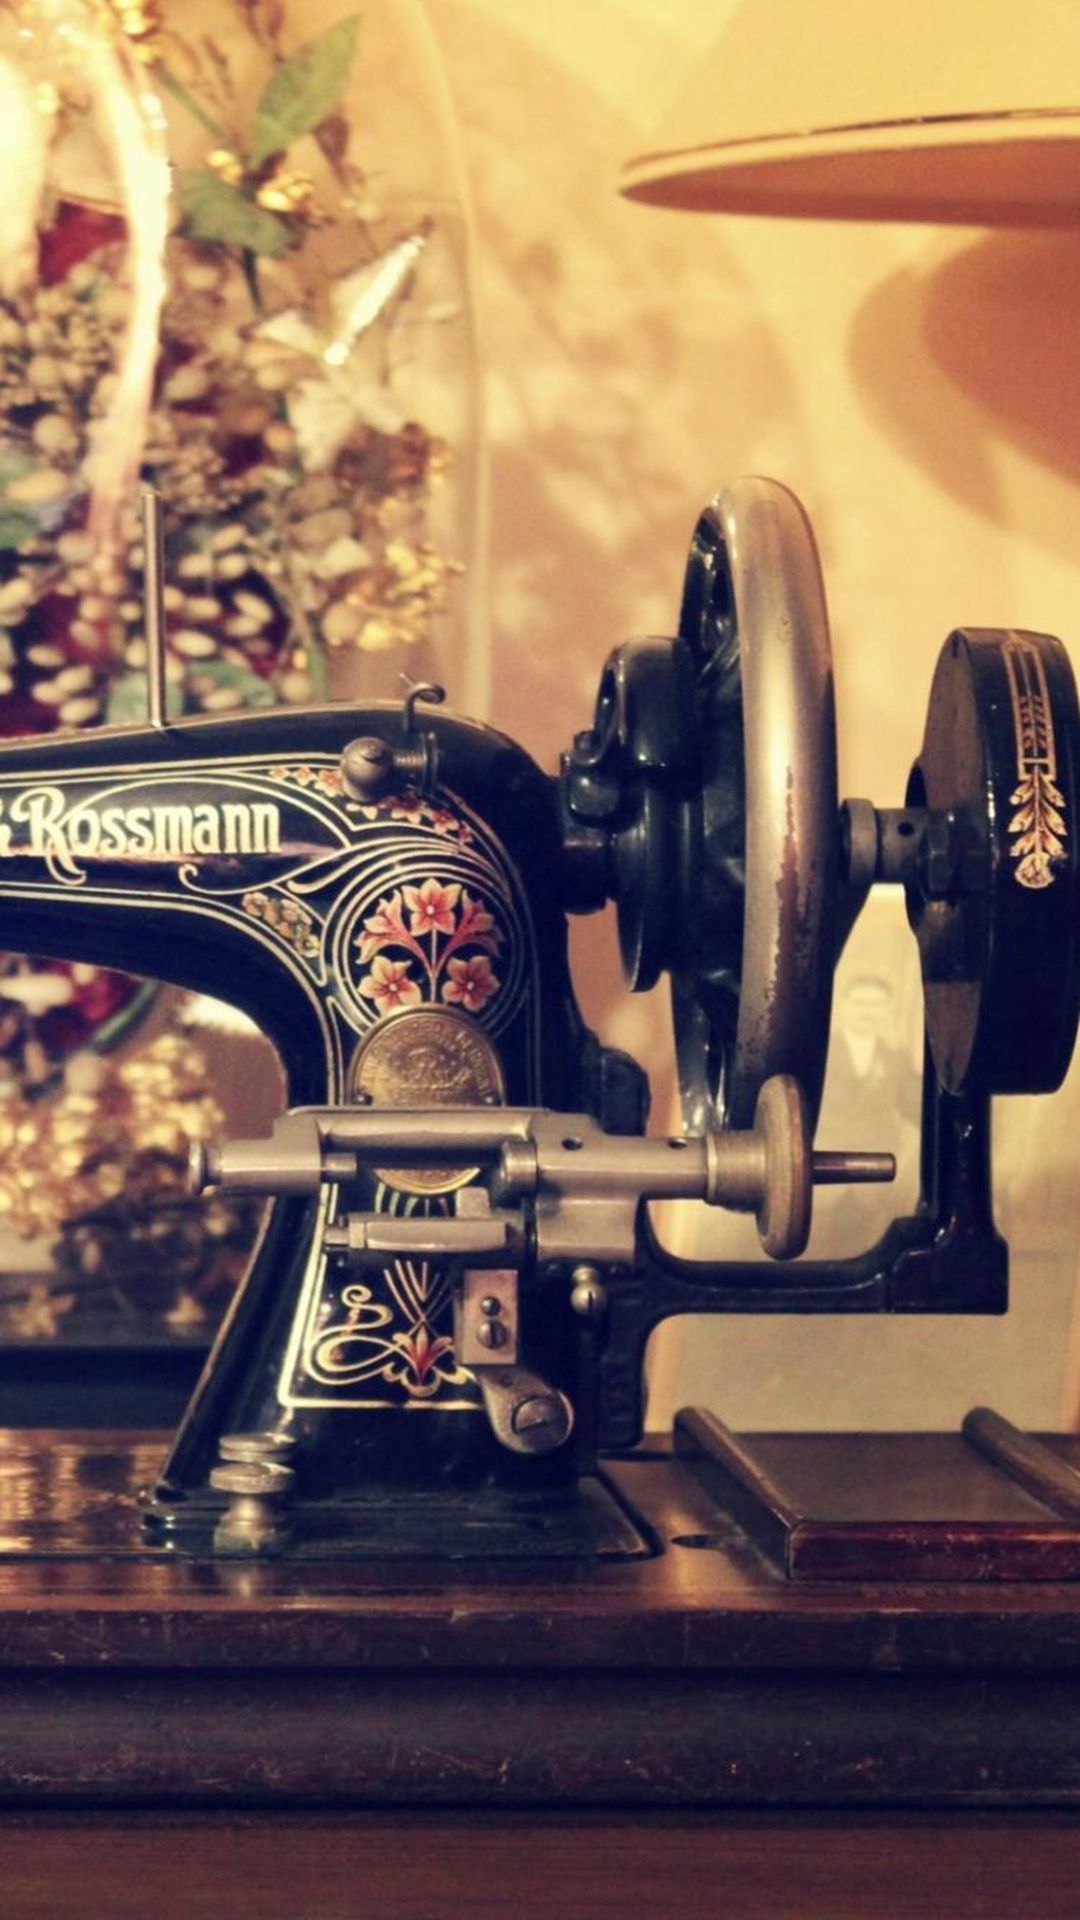 Retro Sewing Machine Table iPhone Plus Wallpaper